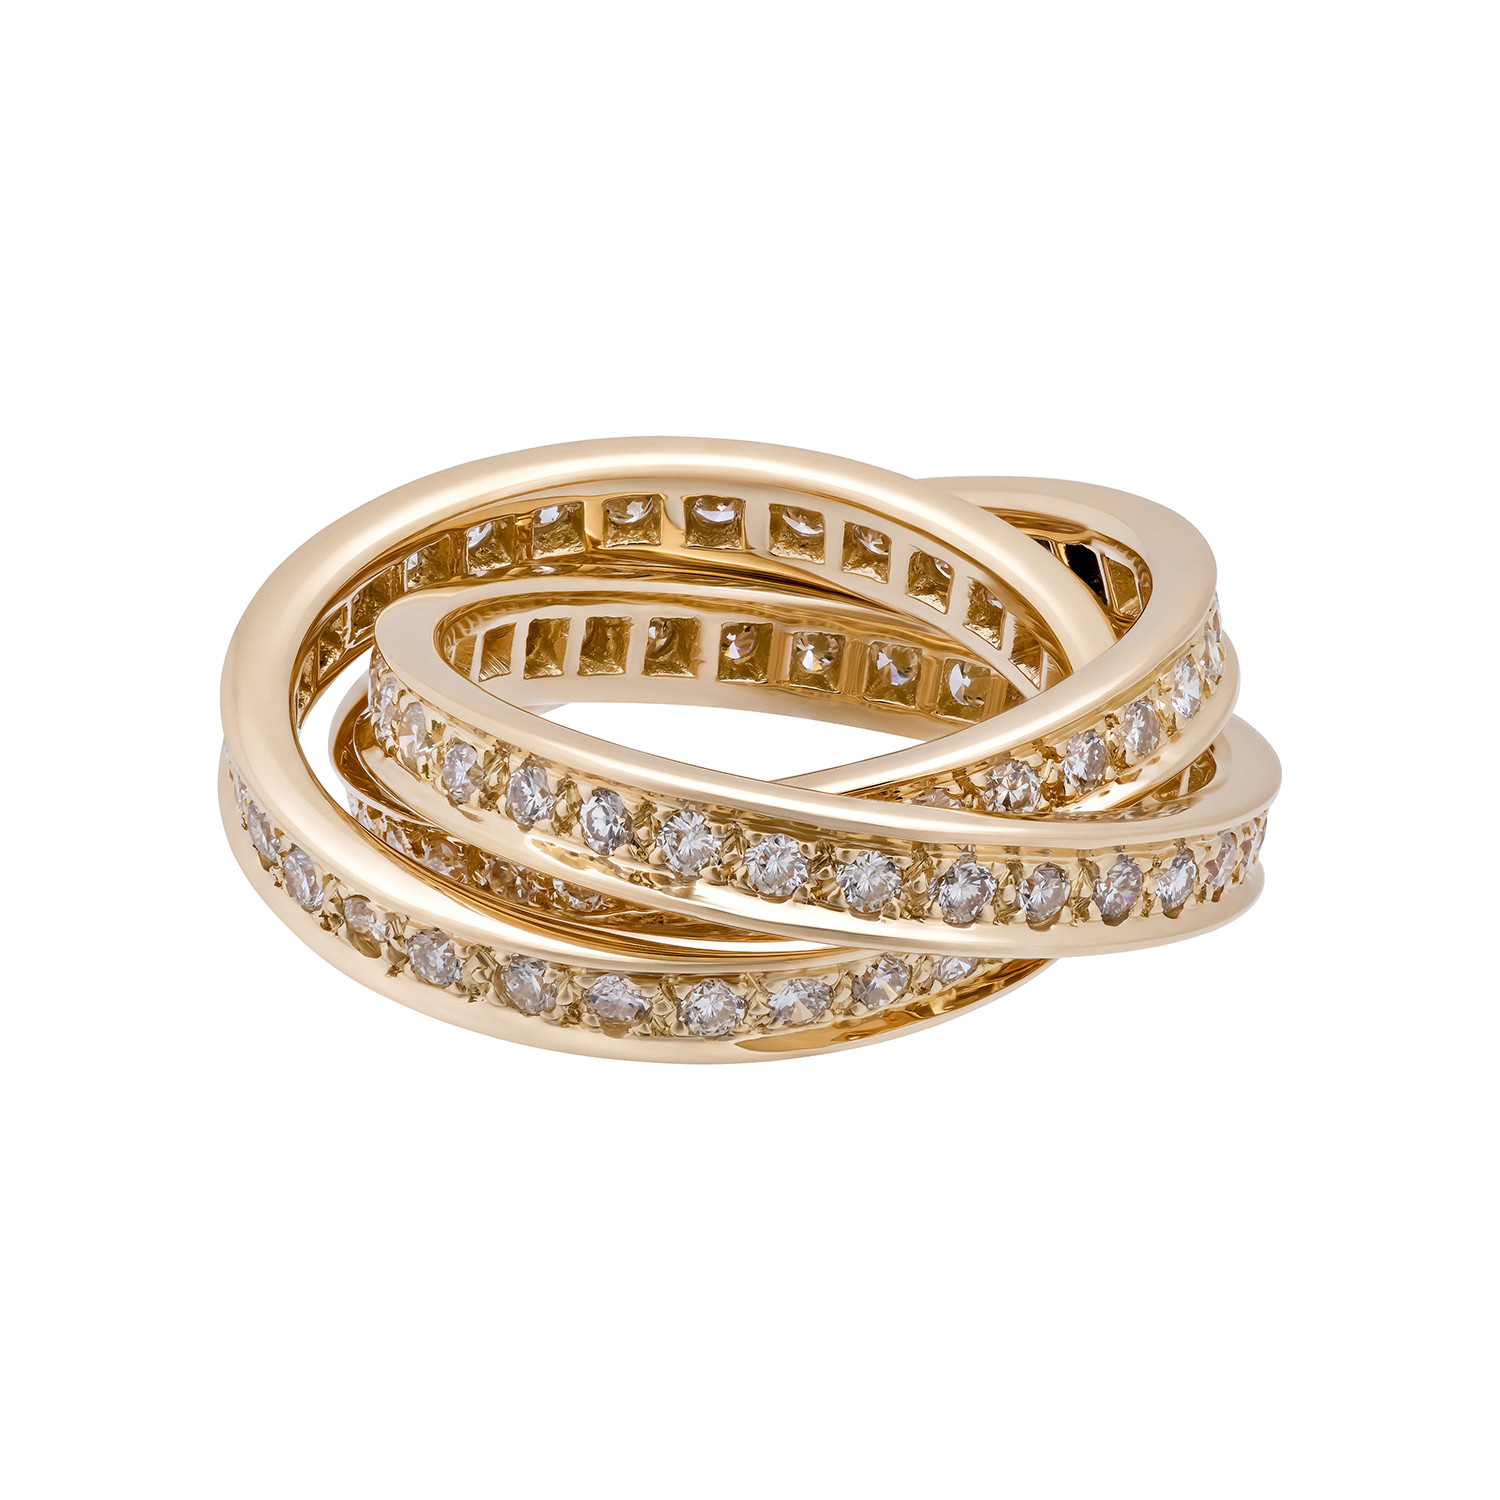 Vintage Cartier 18k Yellow Gold Diamond Trinity Ring // Size 5.75 - Women's Designer Jewelry 